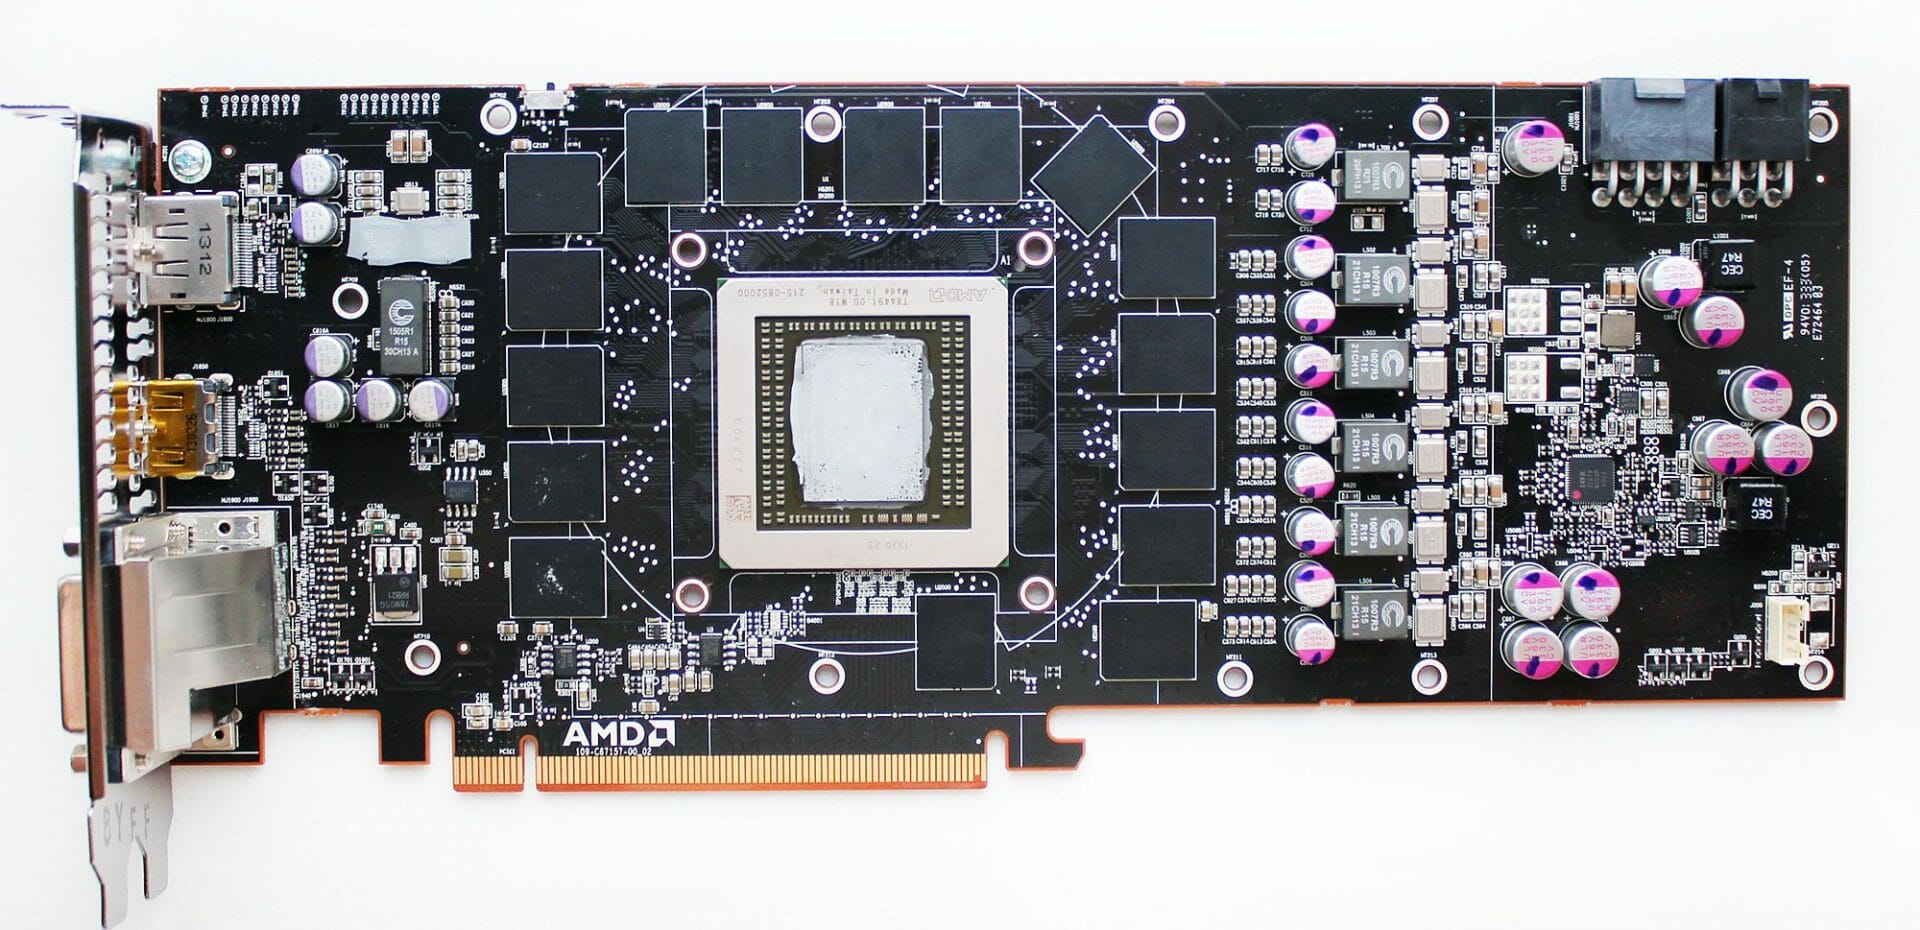 8 AMD Radeon R9 290 pcb